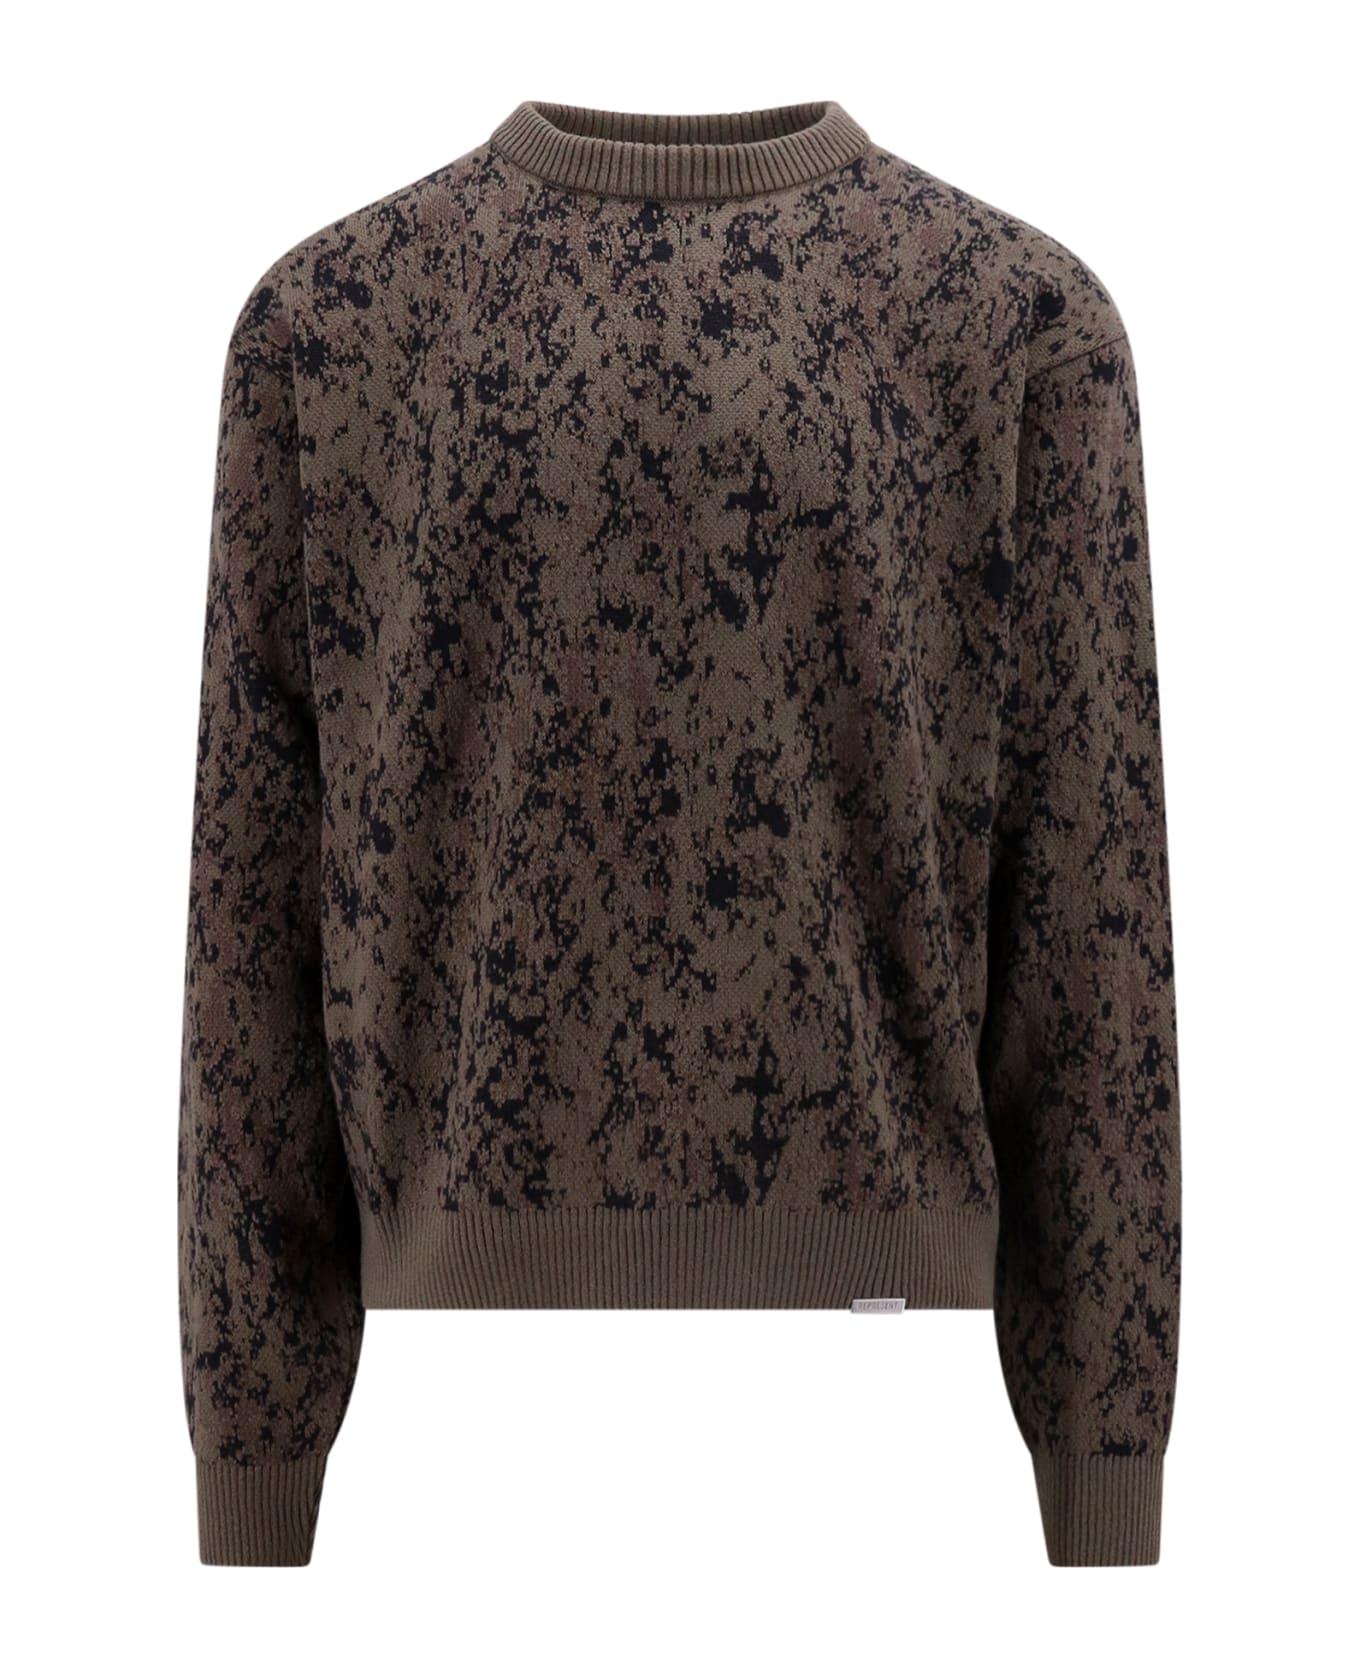 REPRESENT Sweater Sweater - CAMO ニットウェア